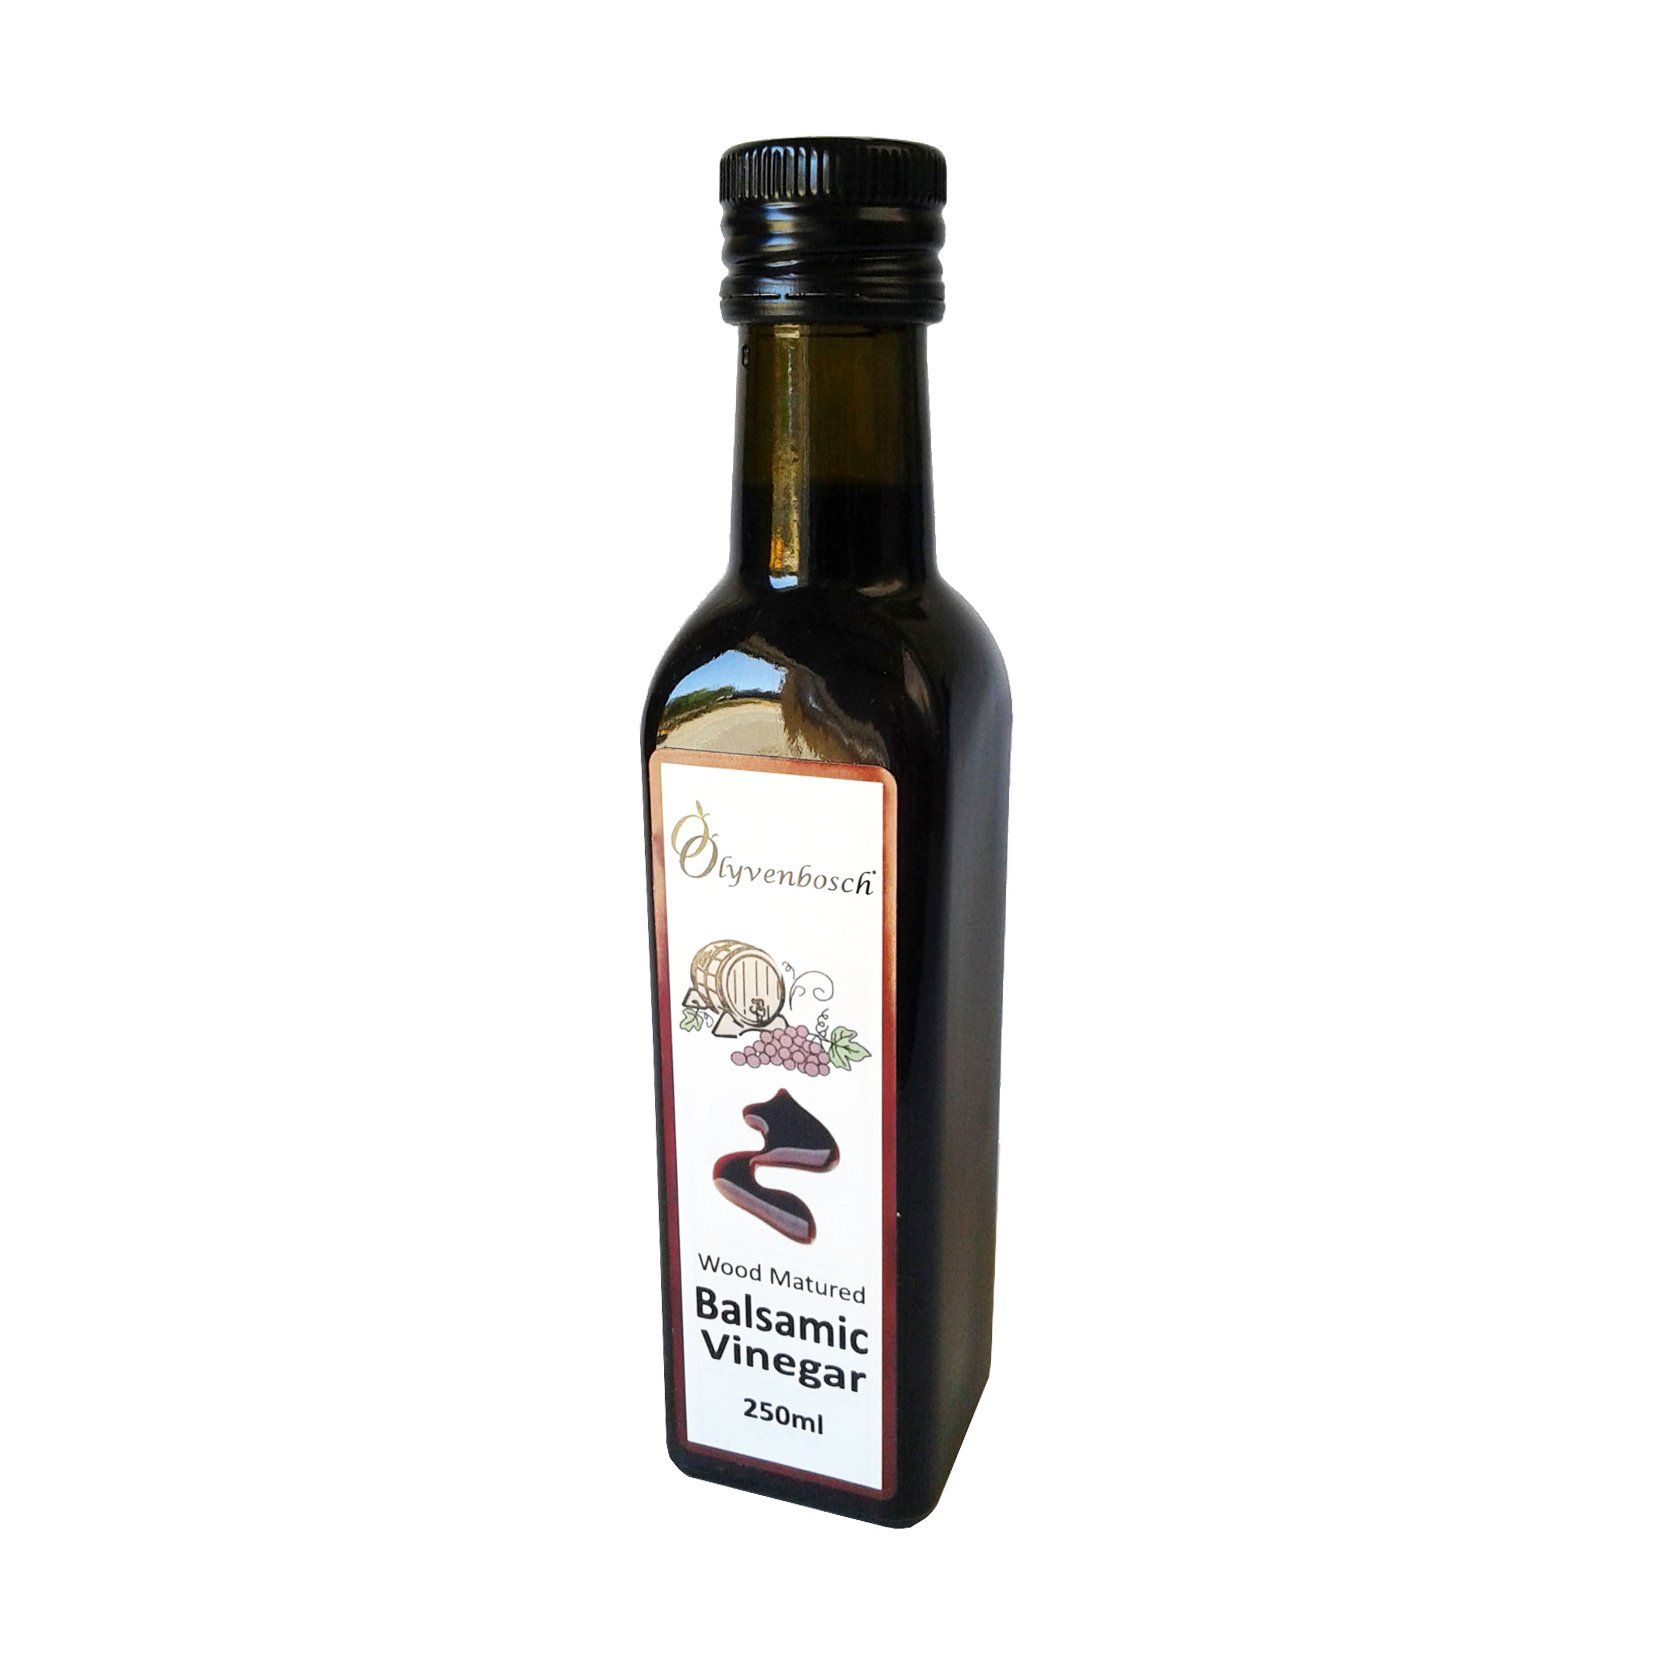 Olyvenbosch Wood-Matured Balsamic Vinegar 250ml Glass Bottle food Olyvenbosch Olive Farm